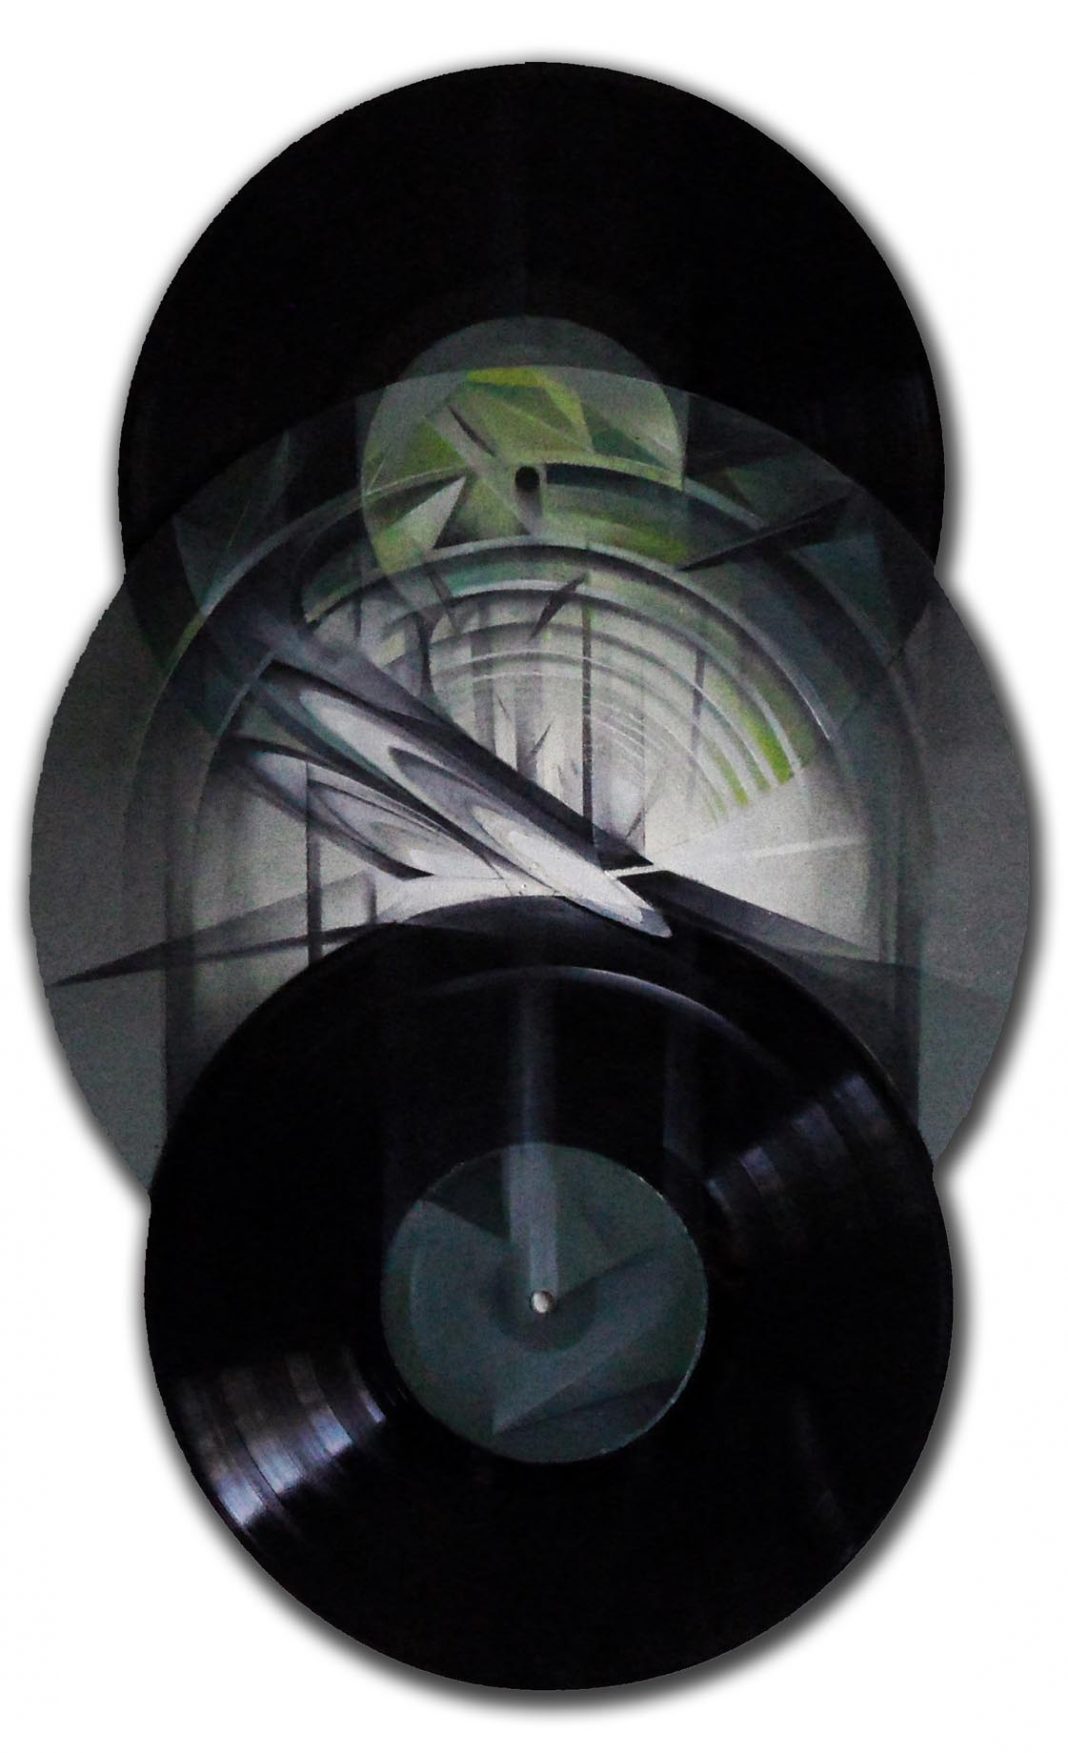 Sketch-Vinyls | Esposizione itinerante di vinili d’autorehttps://www.exibart.com/repository/media/eventi/2014/06/sketch-vinyls-esposizione-itinerante-di-vinili-d’autore-1068x1753.jpg